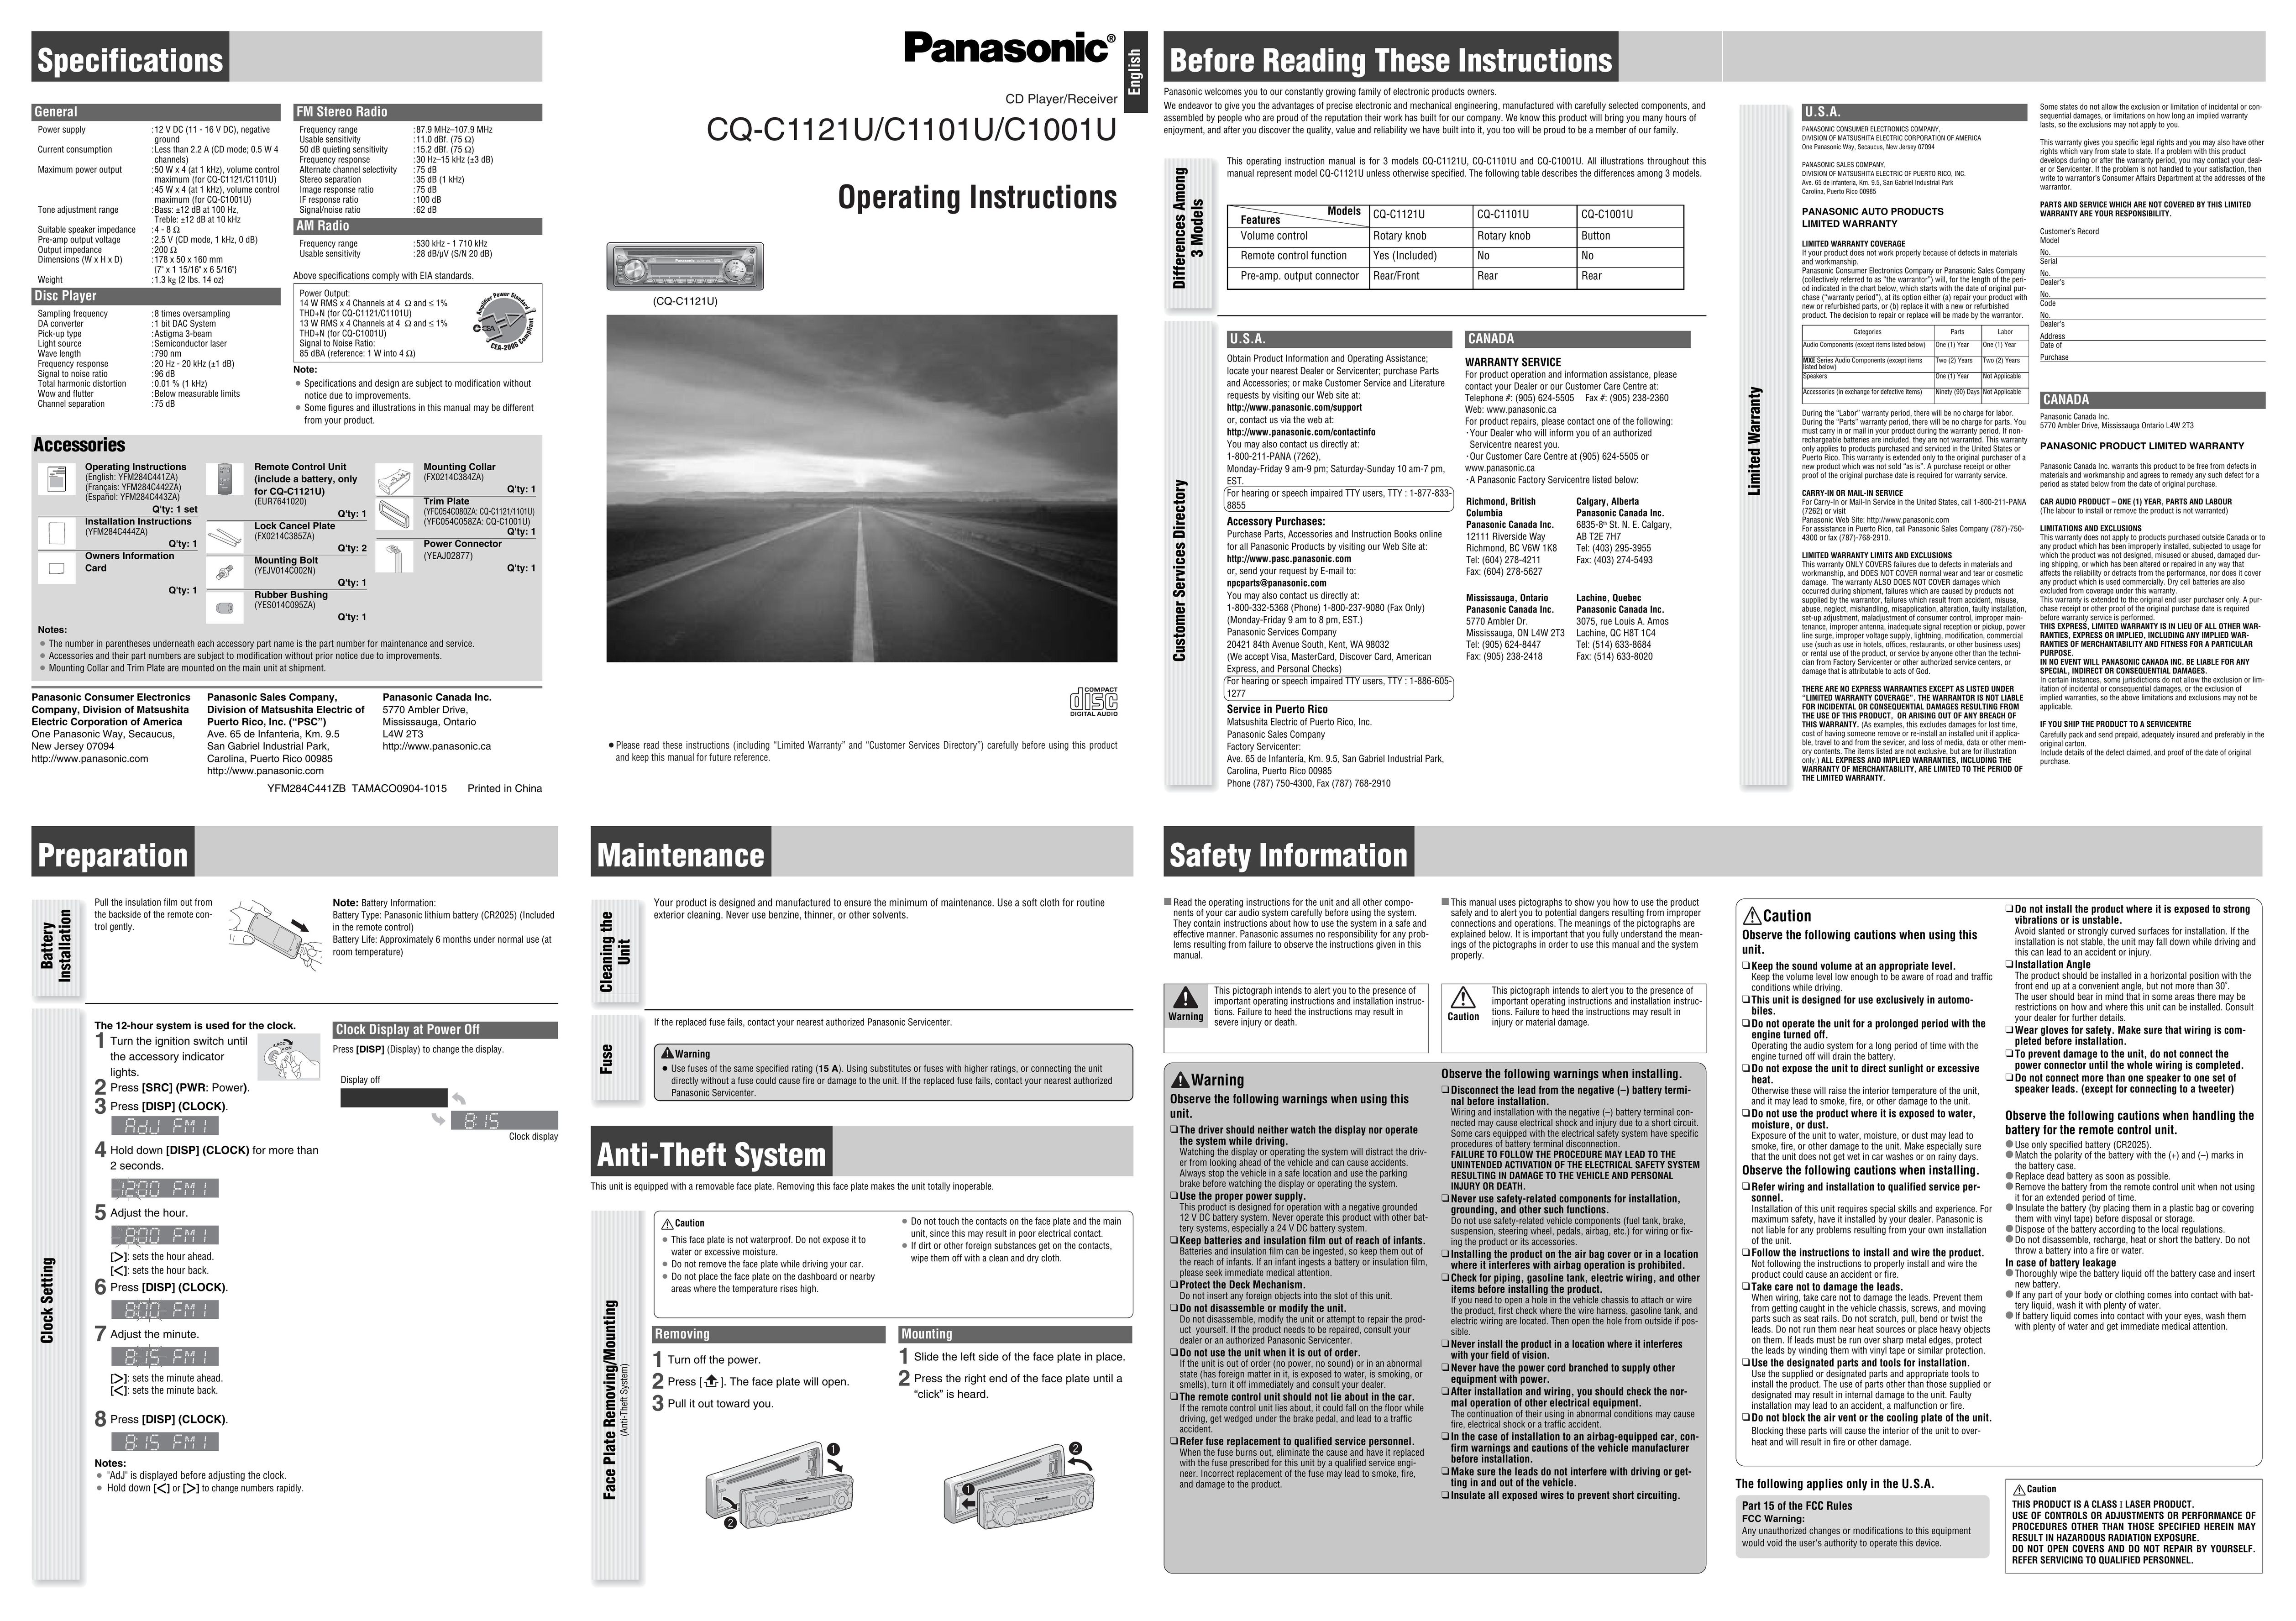 Panasonic CQ-C1101U Car Stereo System User Manual